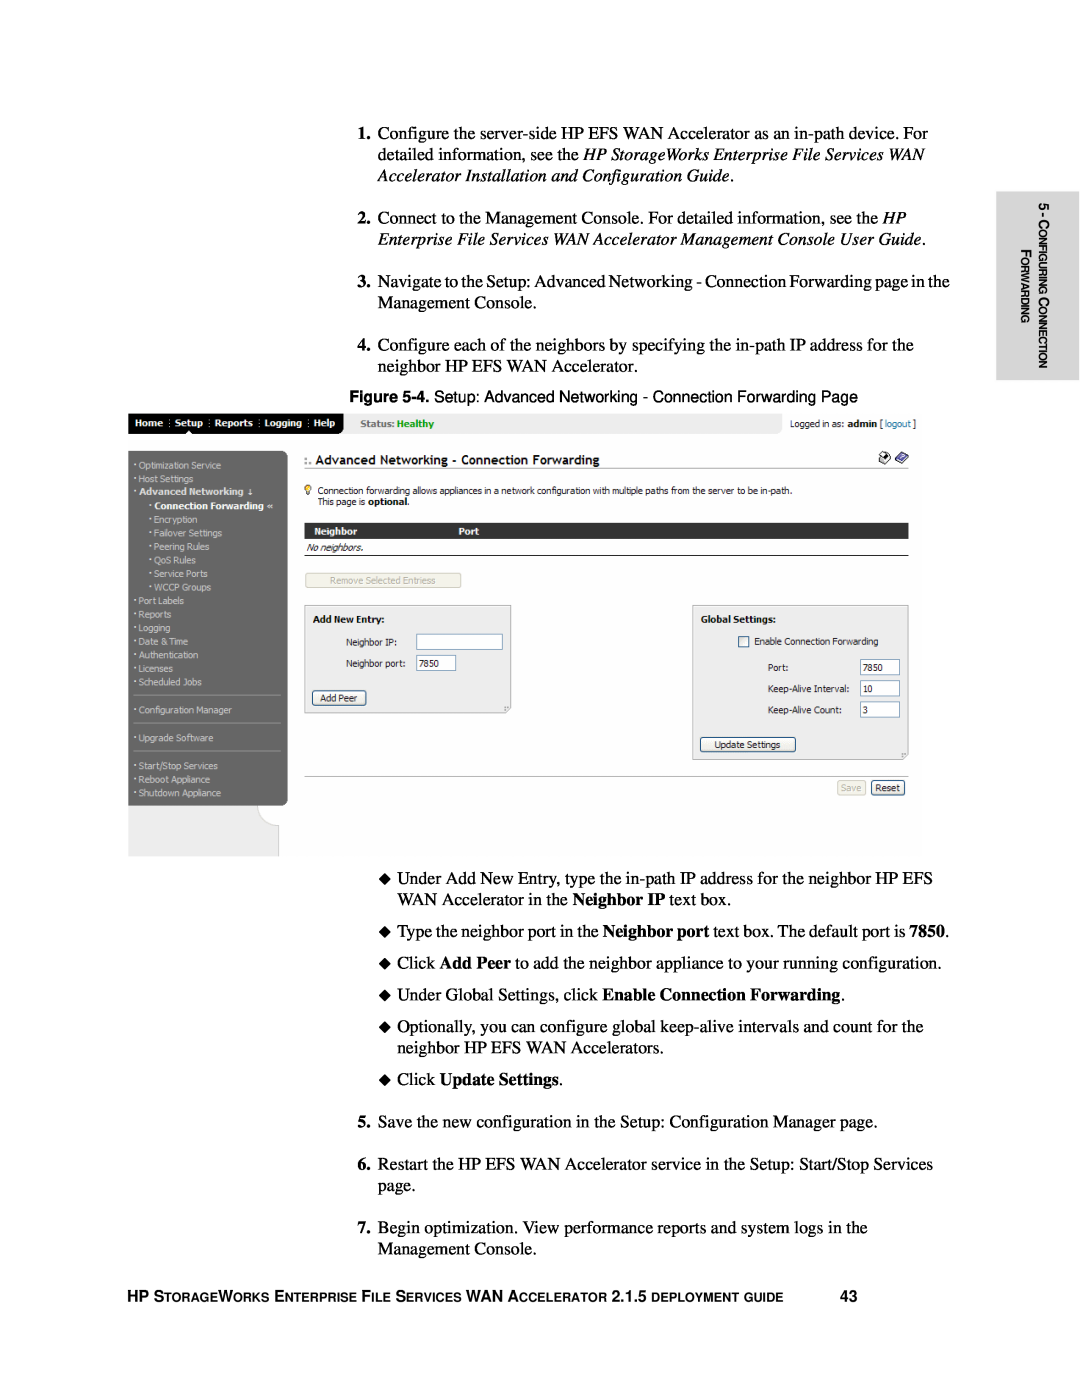 HP Enterprise File Services WAN Accelerator manual ‹ Click Update Settings 